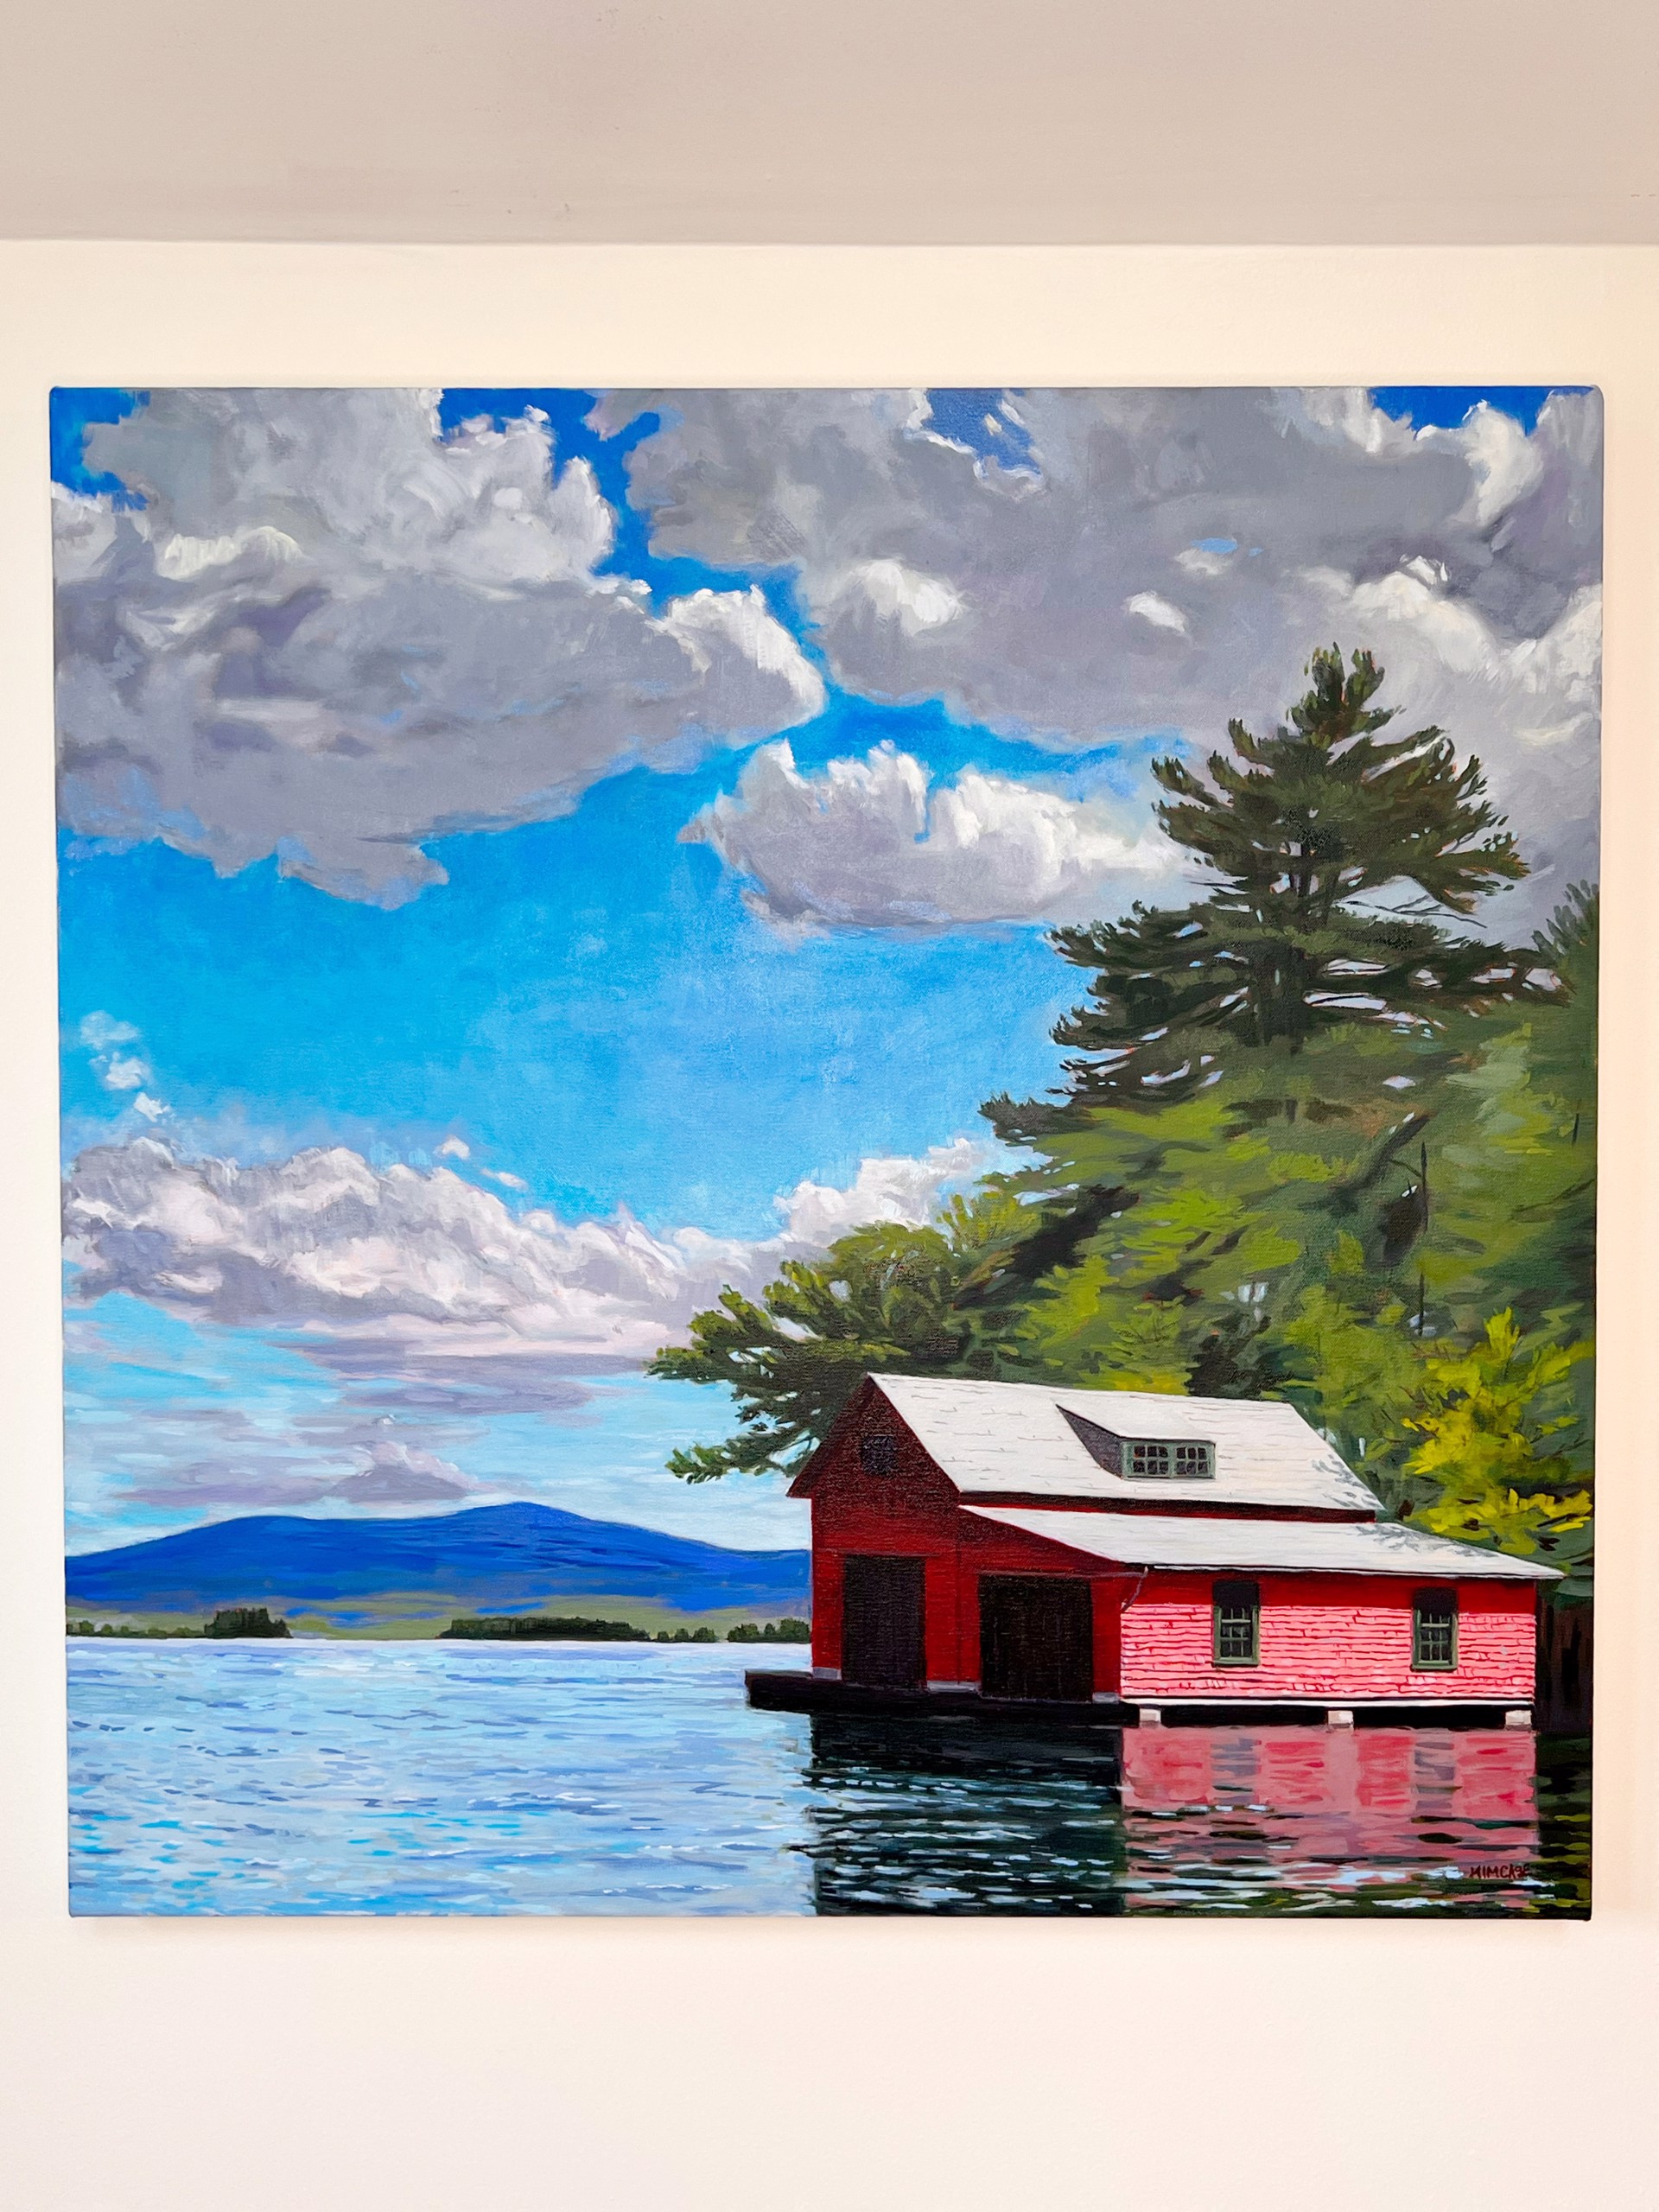 Boathouse in July by Kim Case